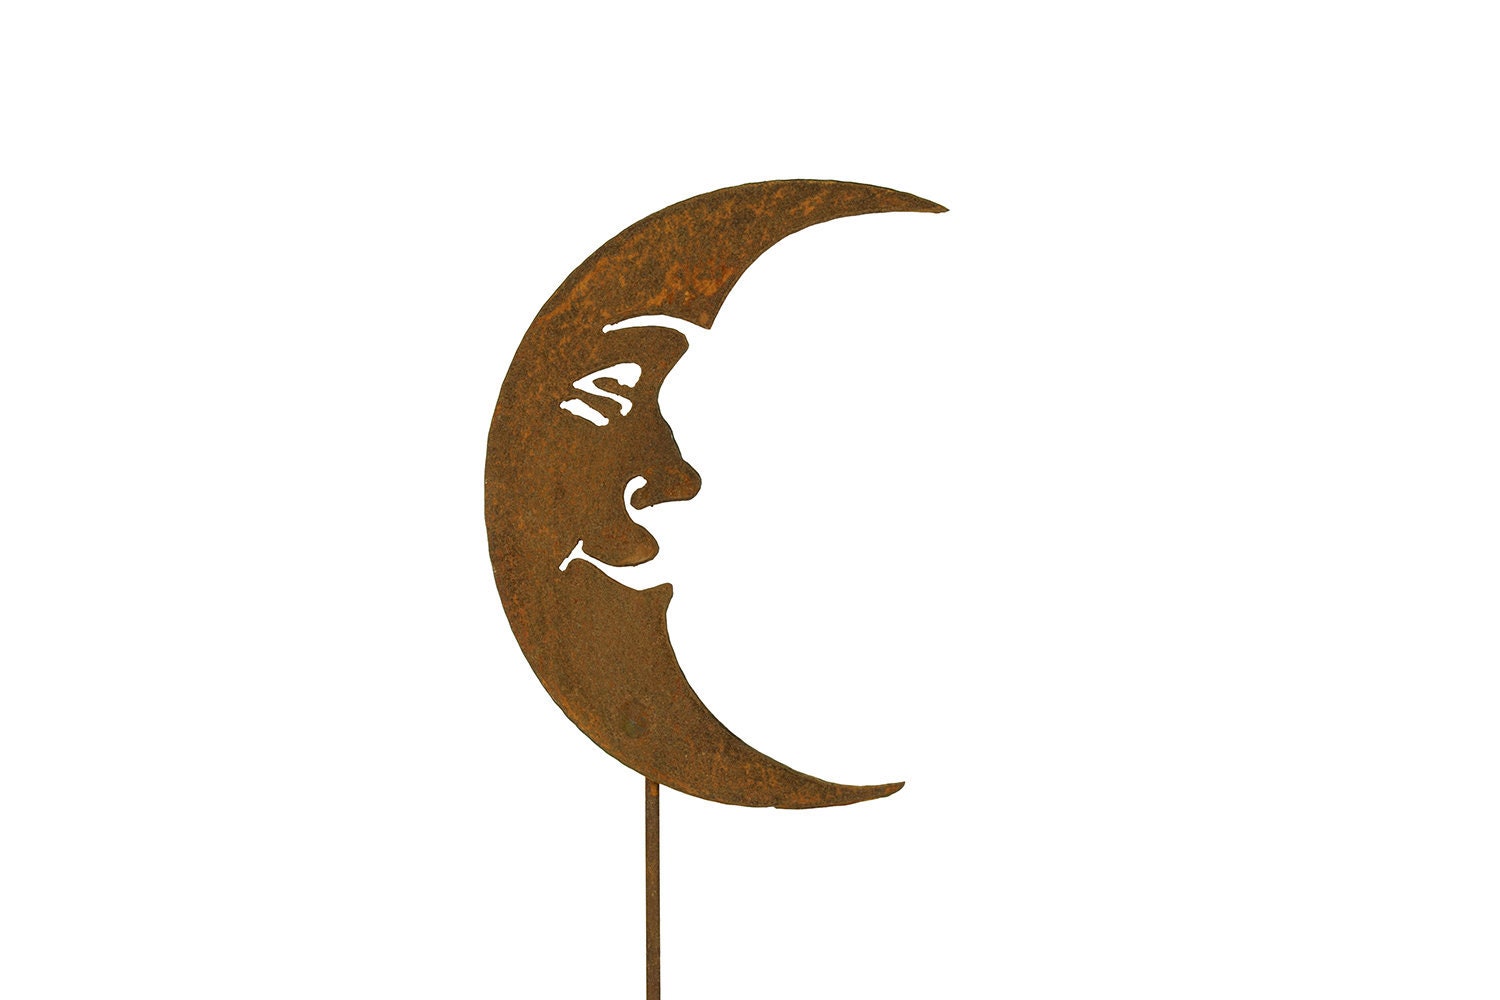 Moon and Lola - Castel Monogram Cuff